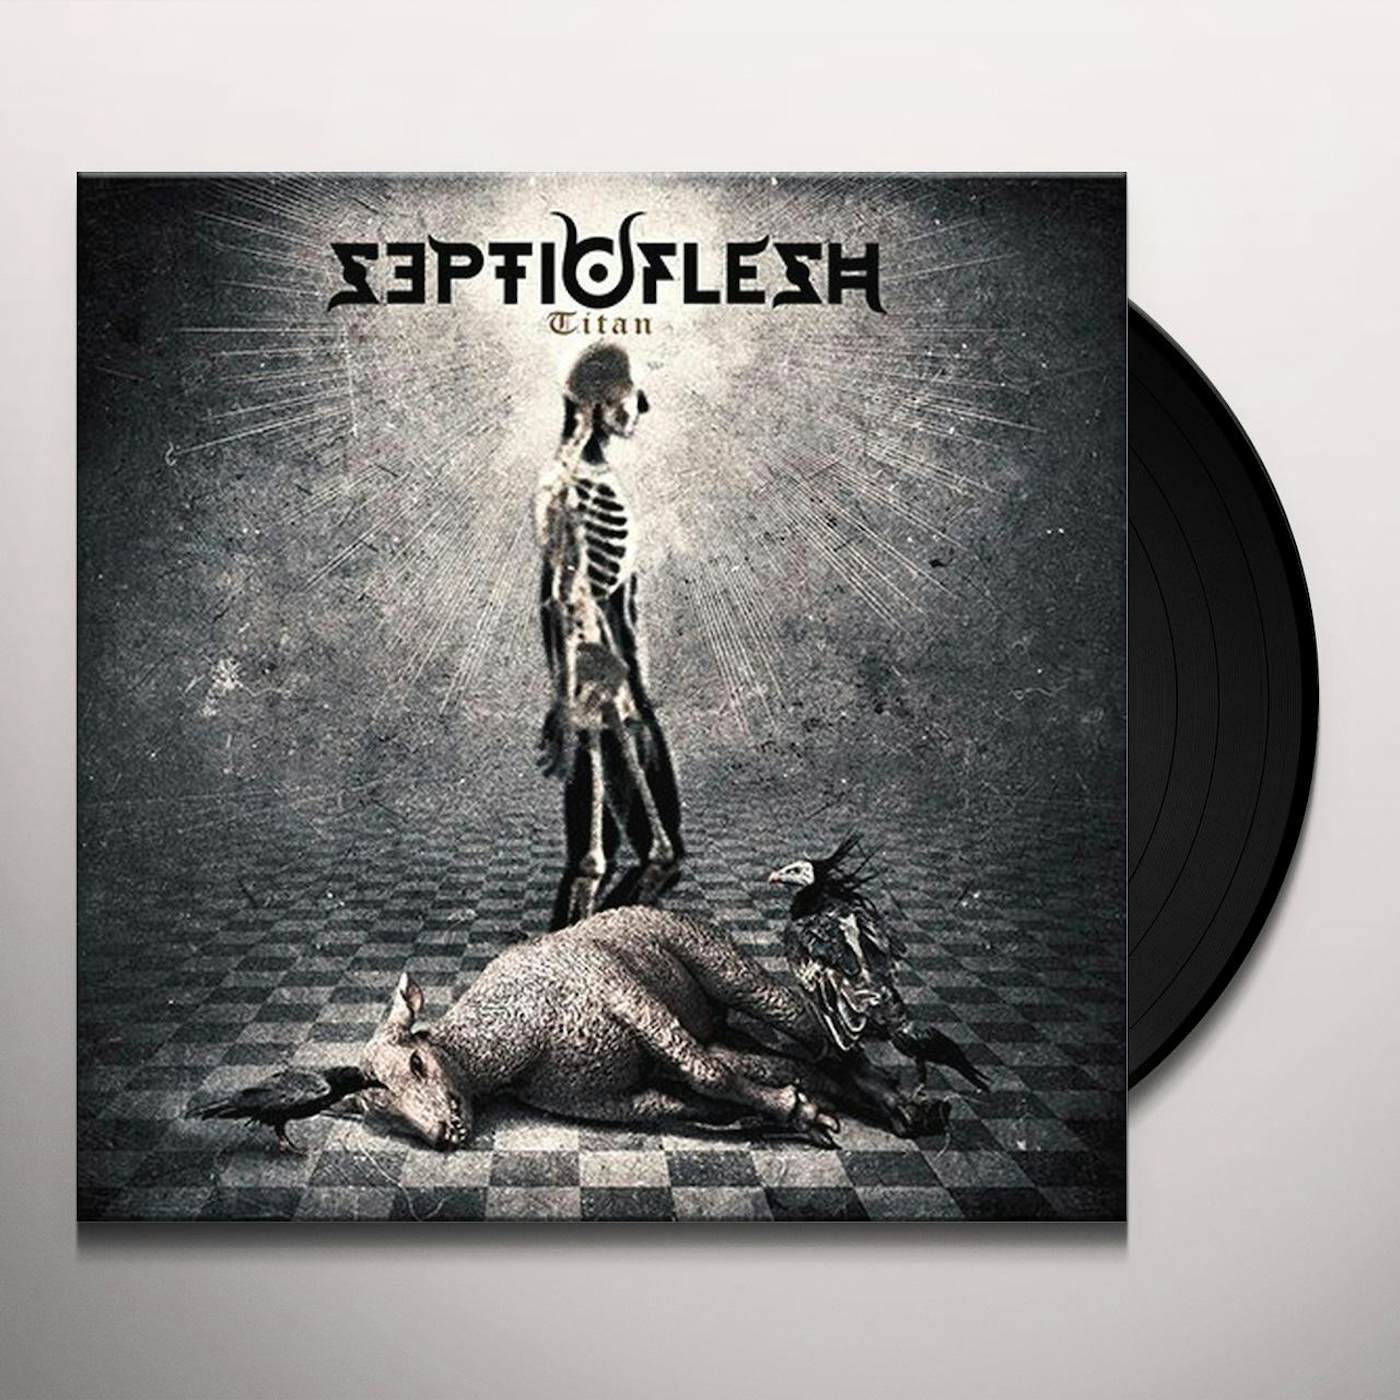 Septicflesh Titan Vinyl Record